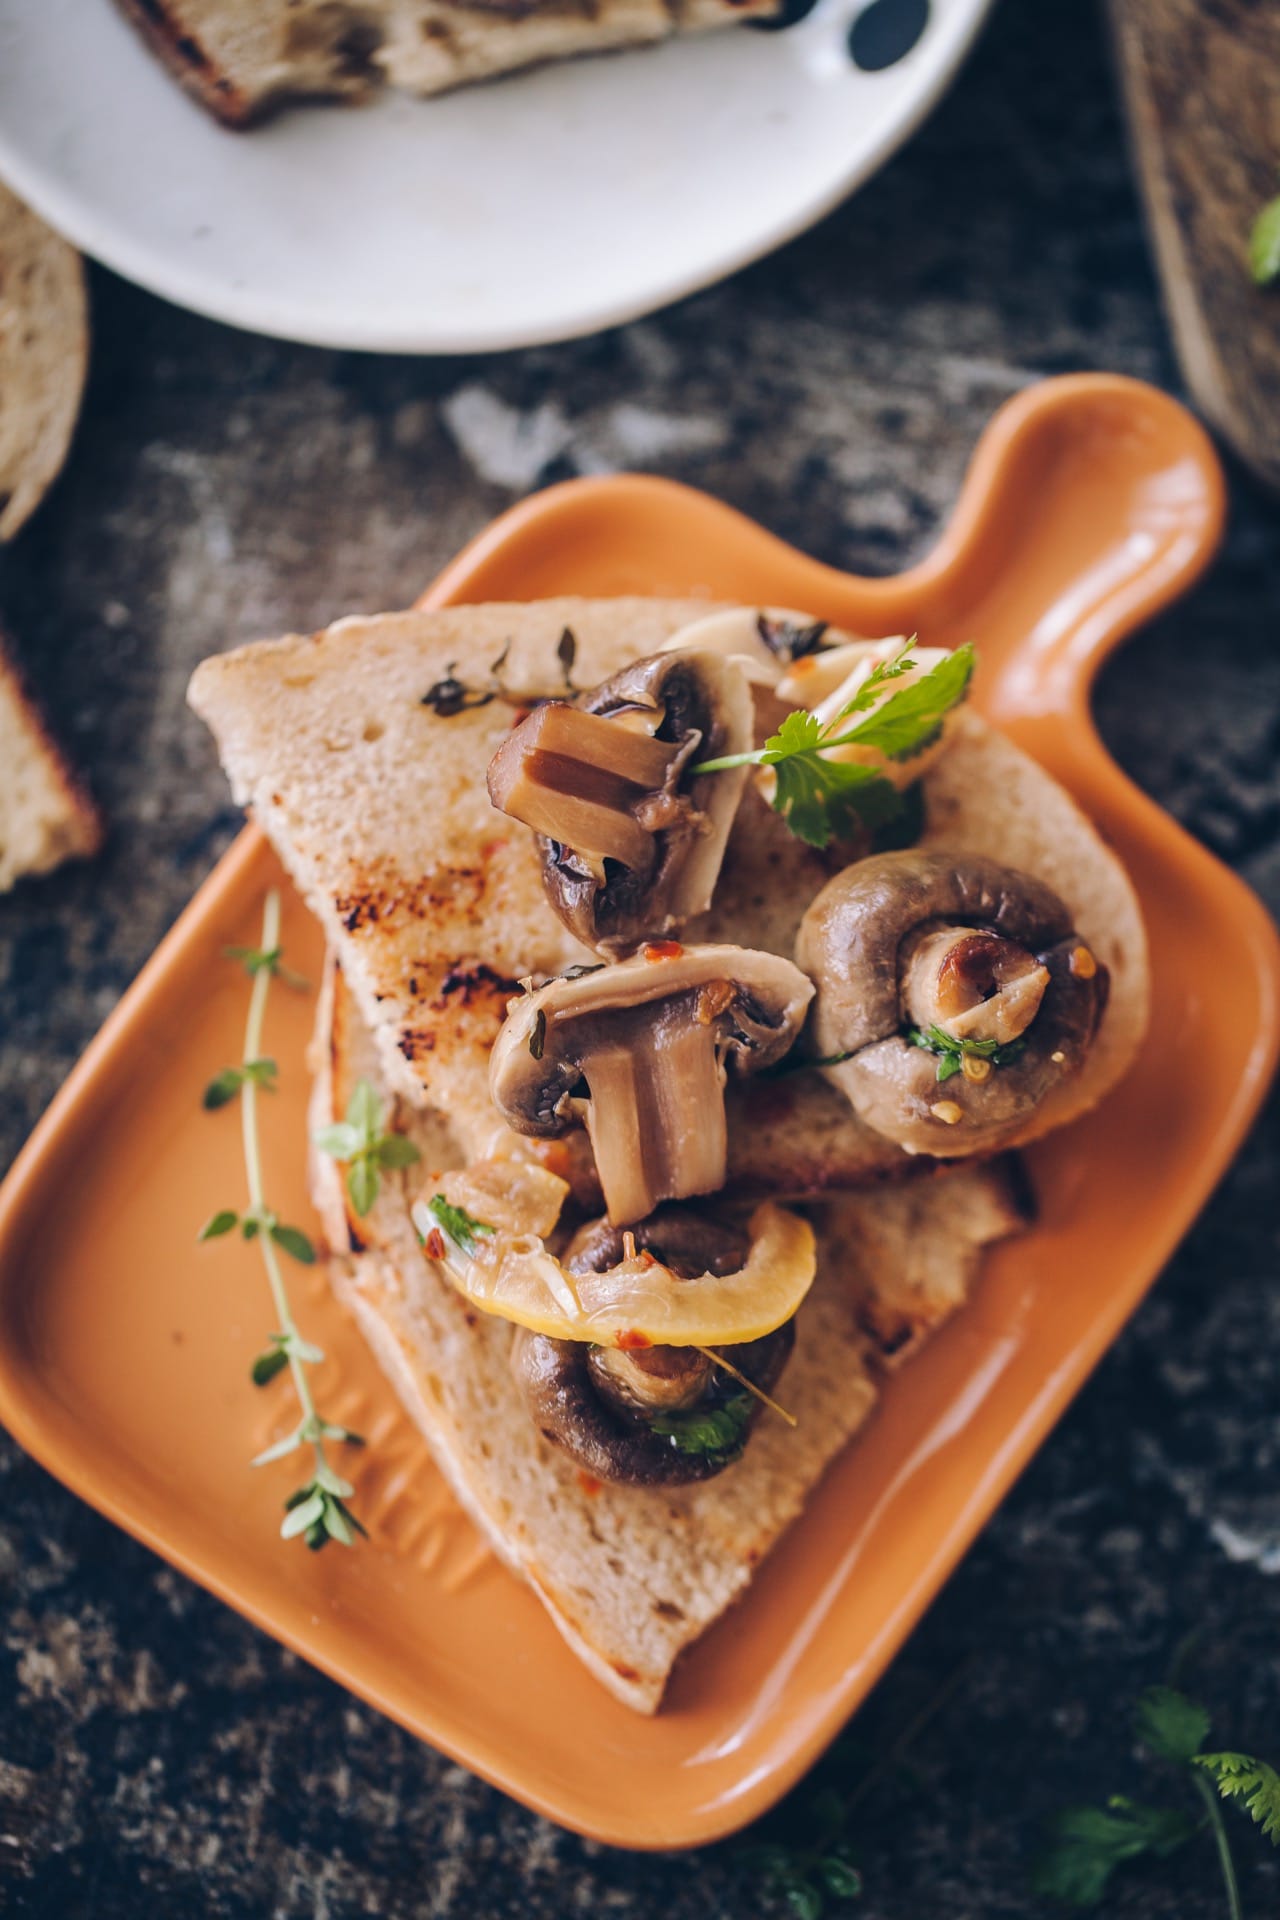 Roasted garlic mushroom | Playful cooking #mushroom #roasting #garlic #foodphotography